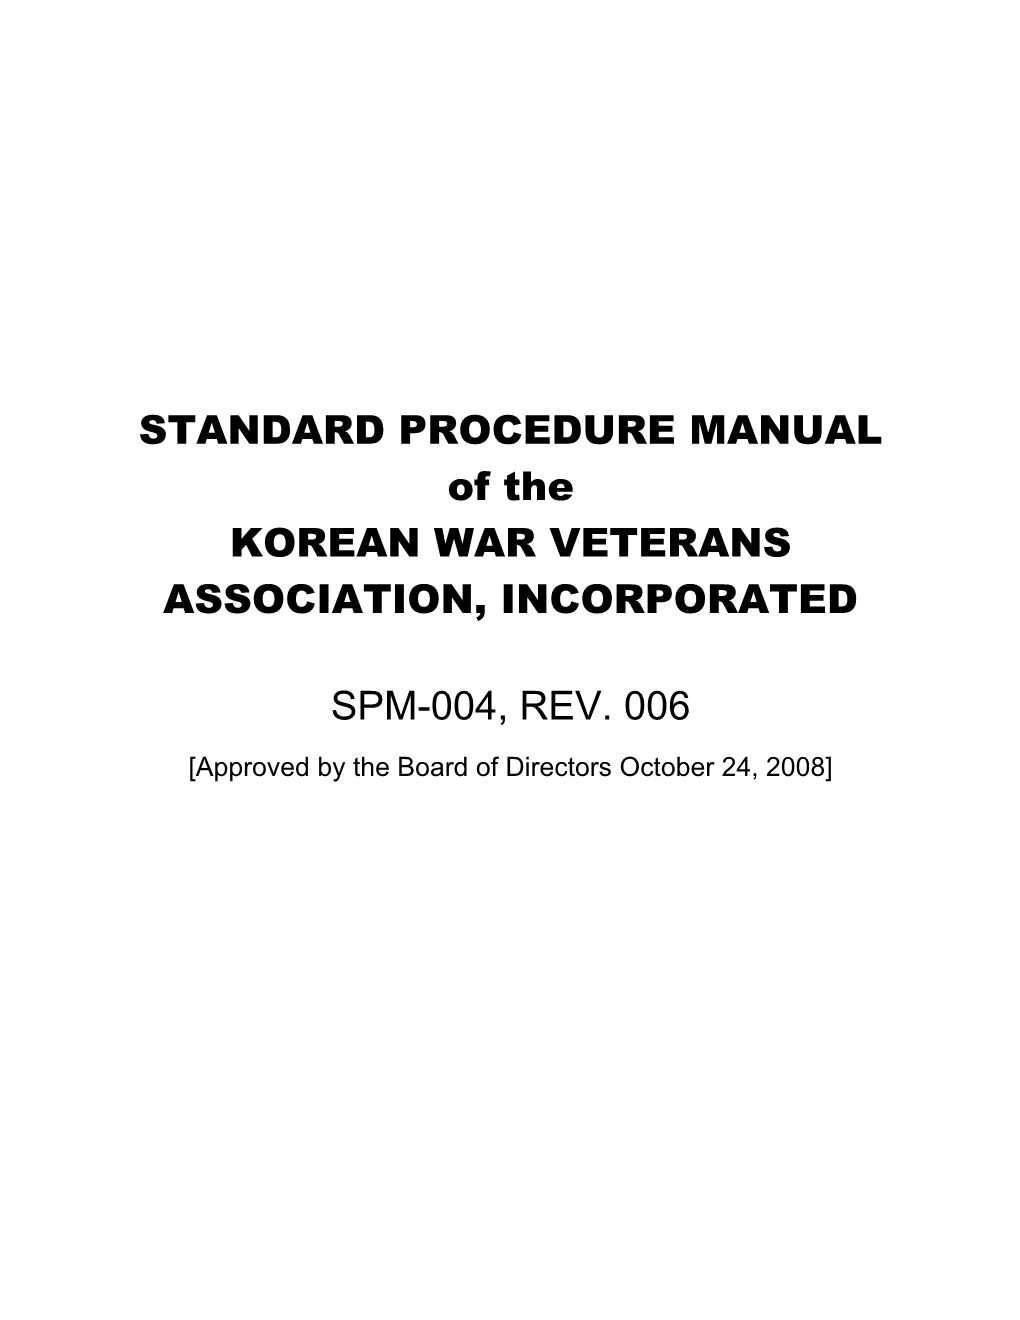 Korean War Veterans Association, Inc